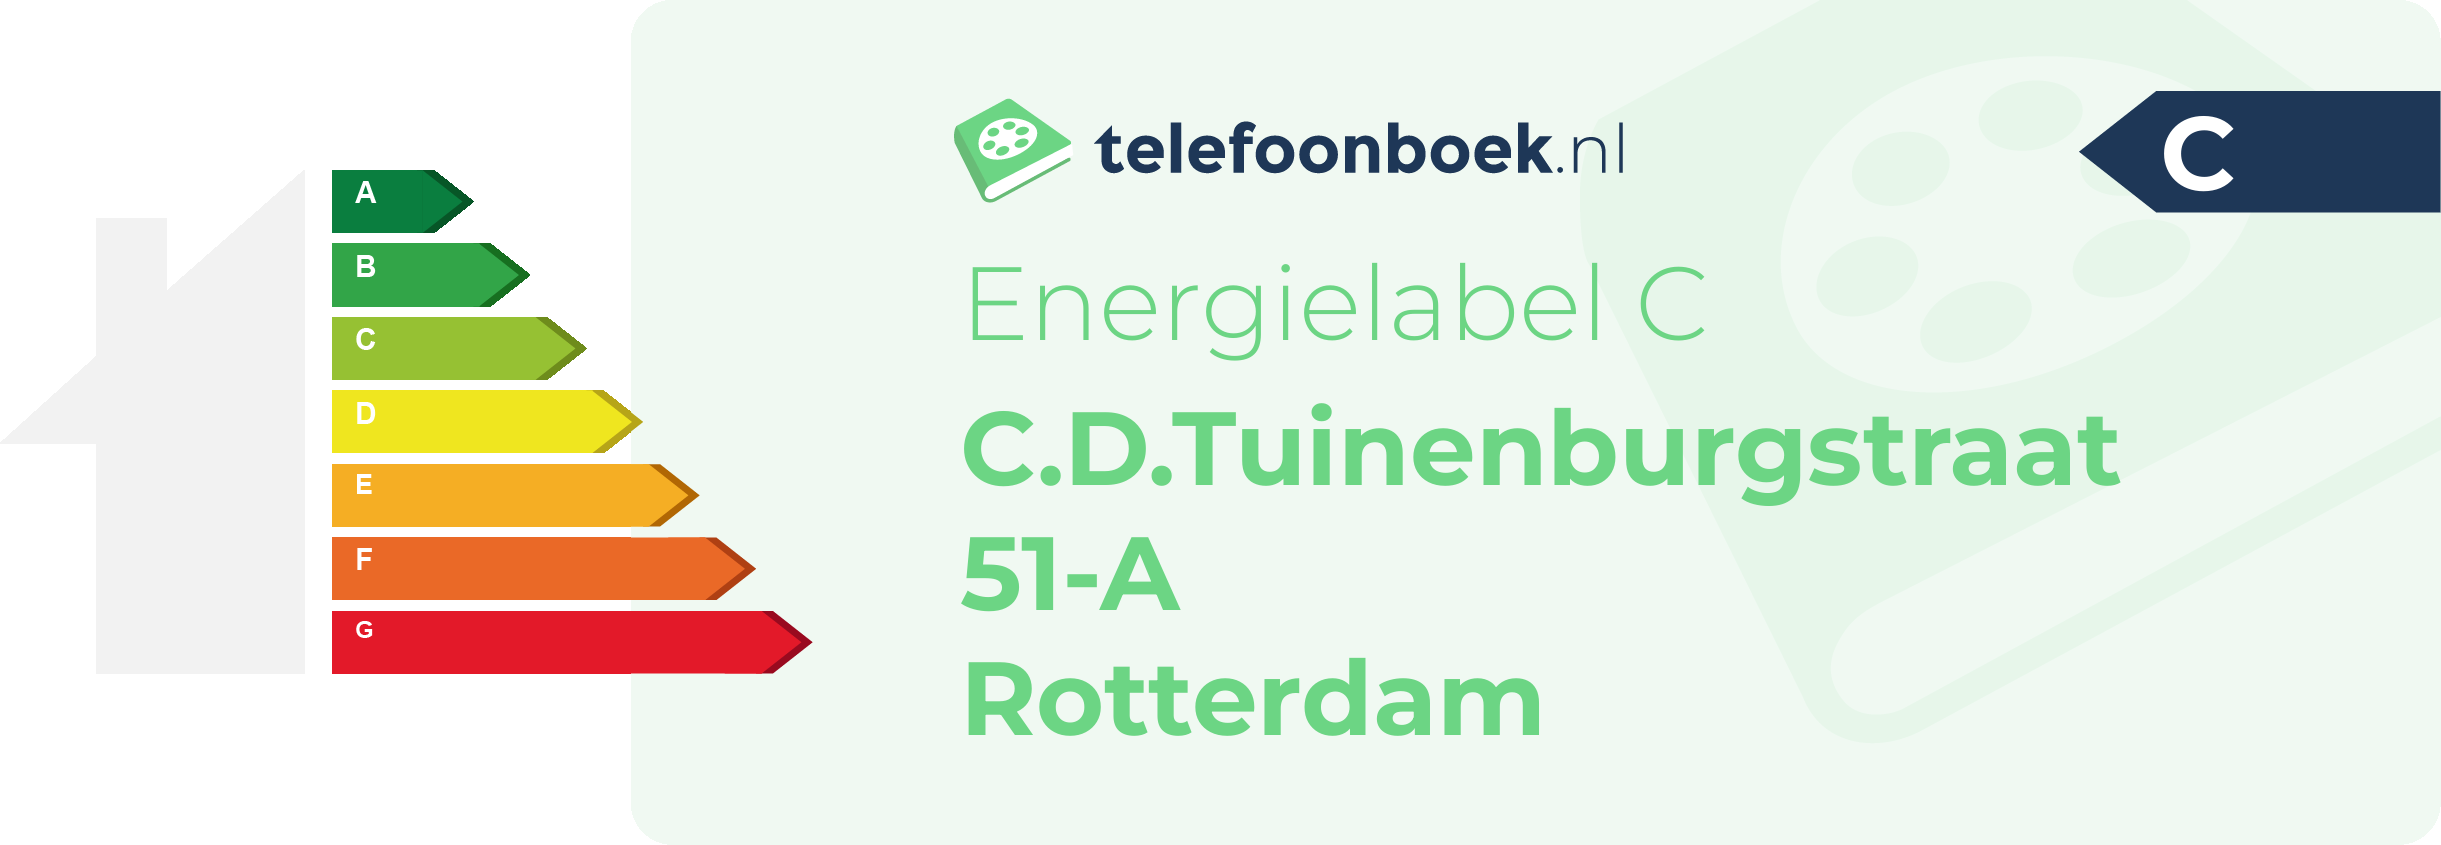 Energielabel C.D.Tuinenburgstraat 51-A Rotterdam